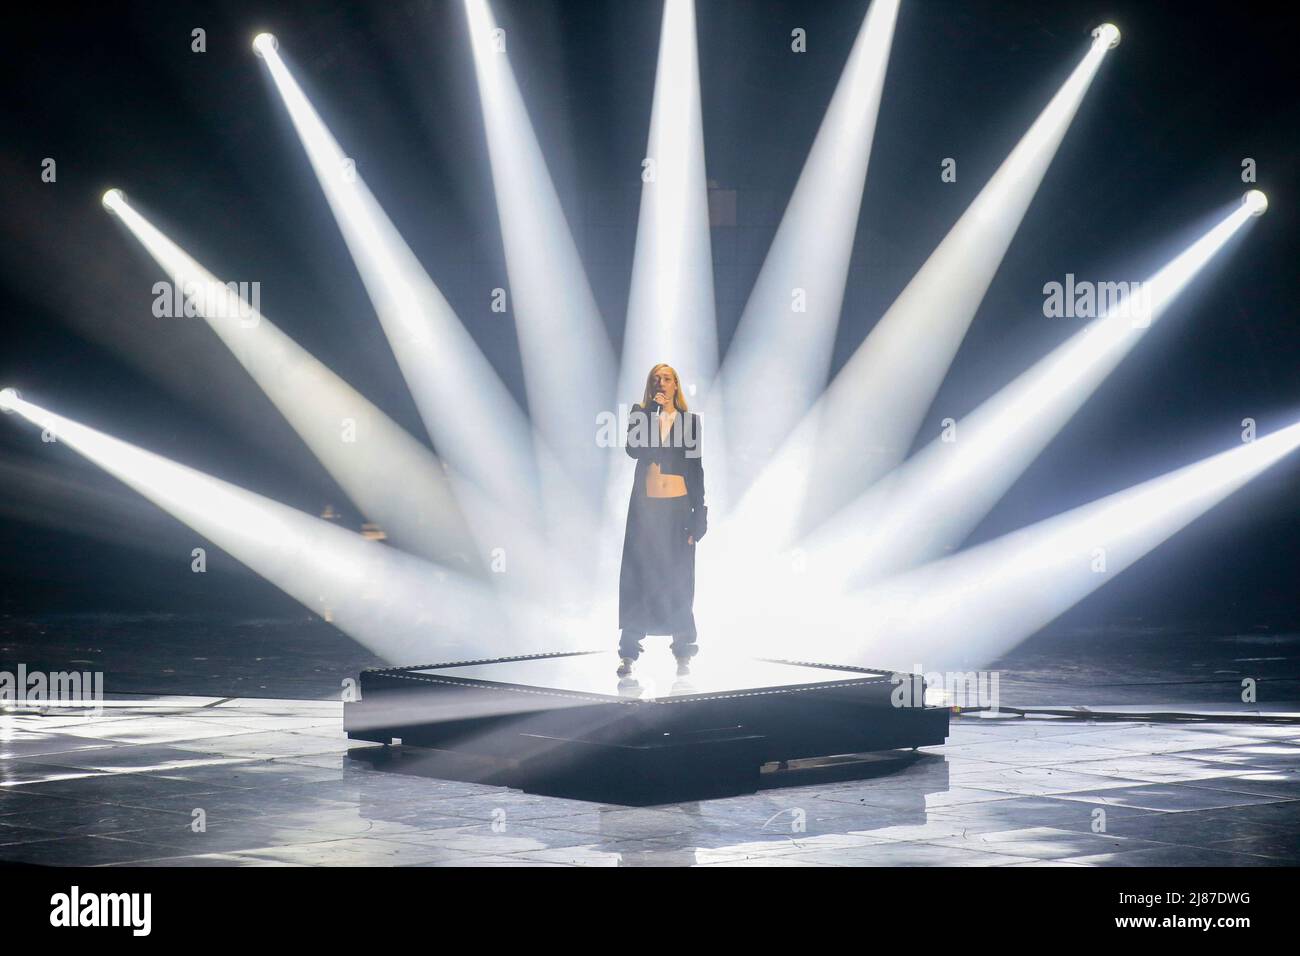 Eurovision Song Contest, Torino 2022 Stock Photo - Alamy